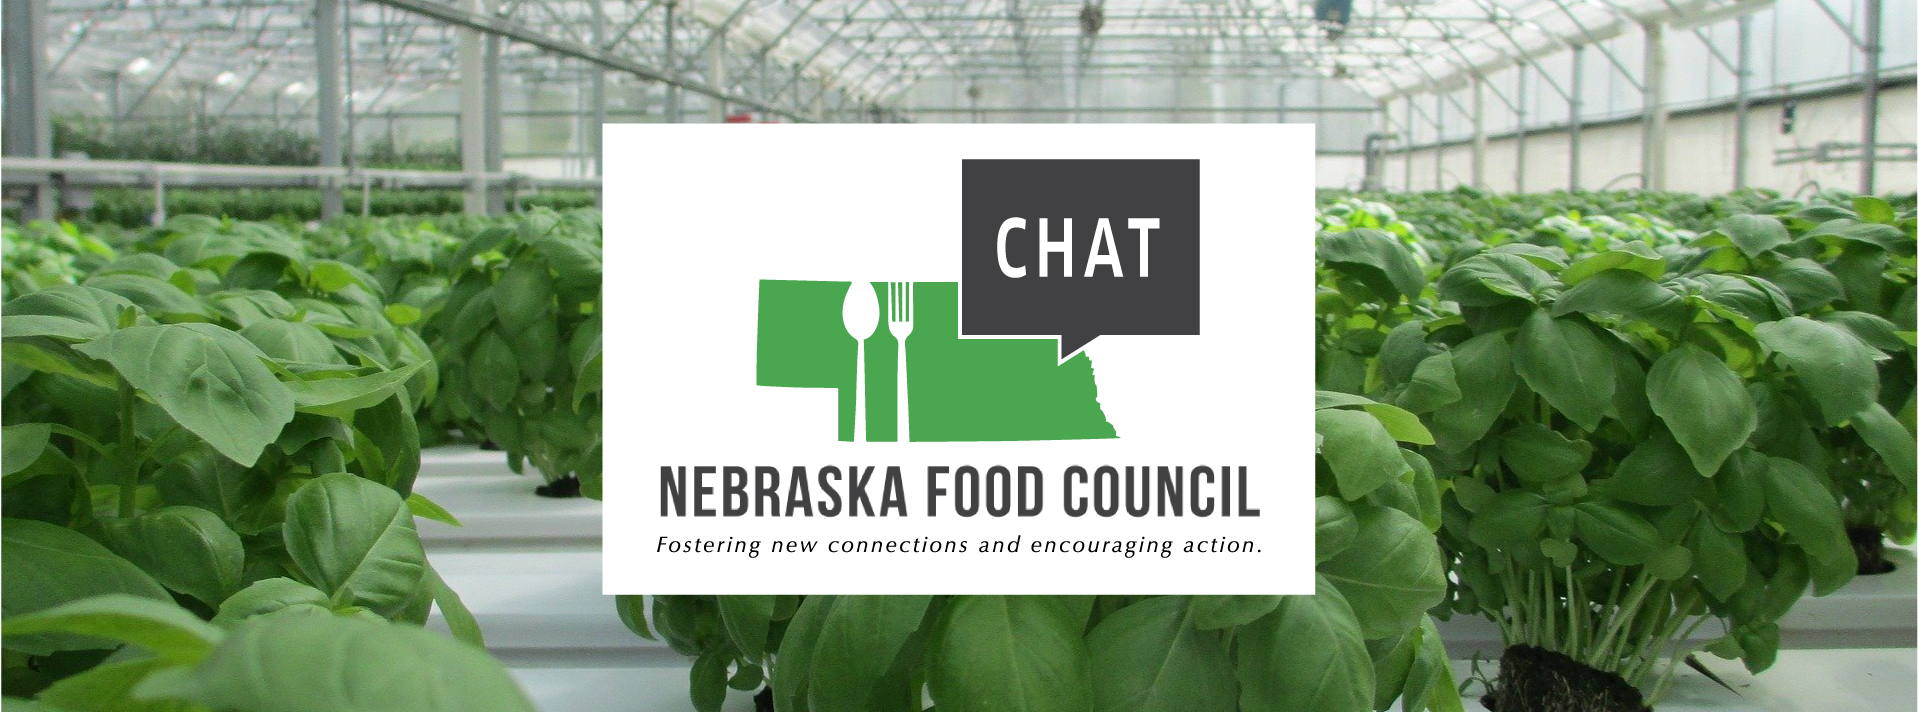 food-chat-logo-over-top-of-image-of-vegetables-growing-in-hoop-house